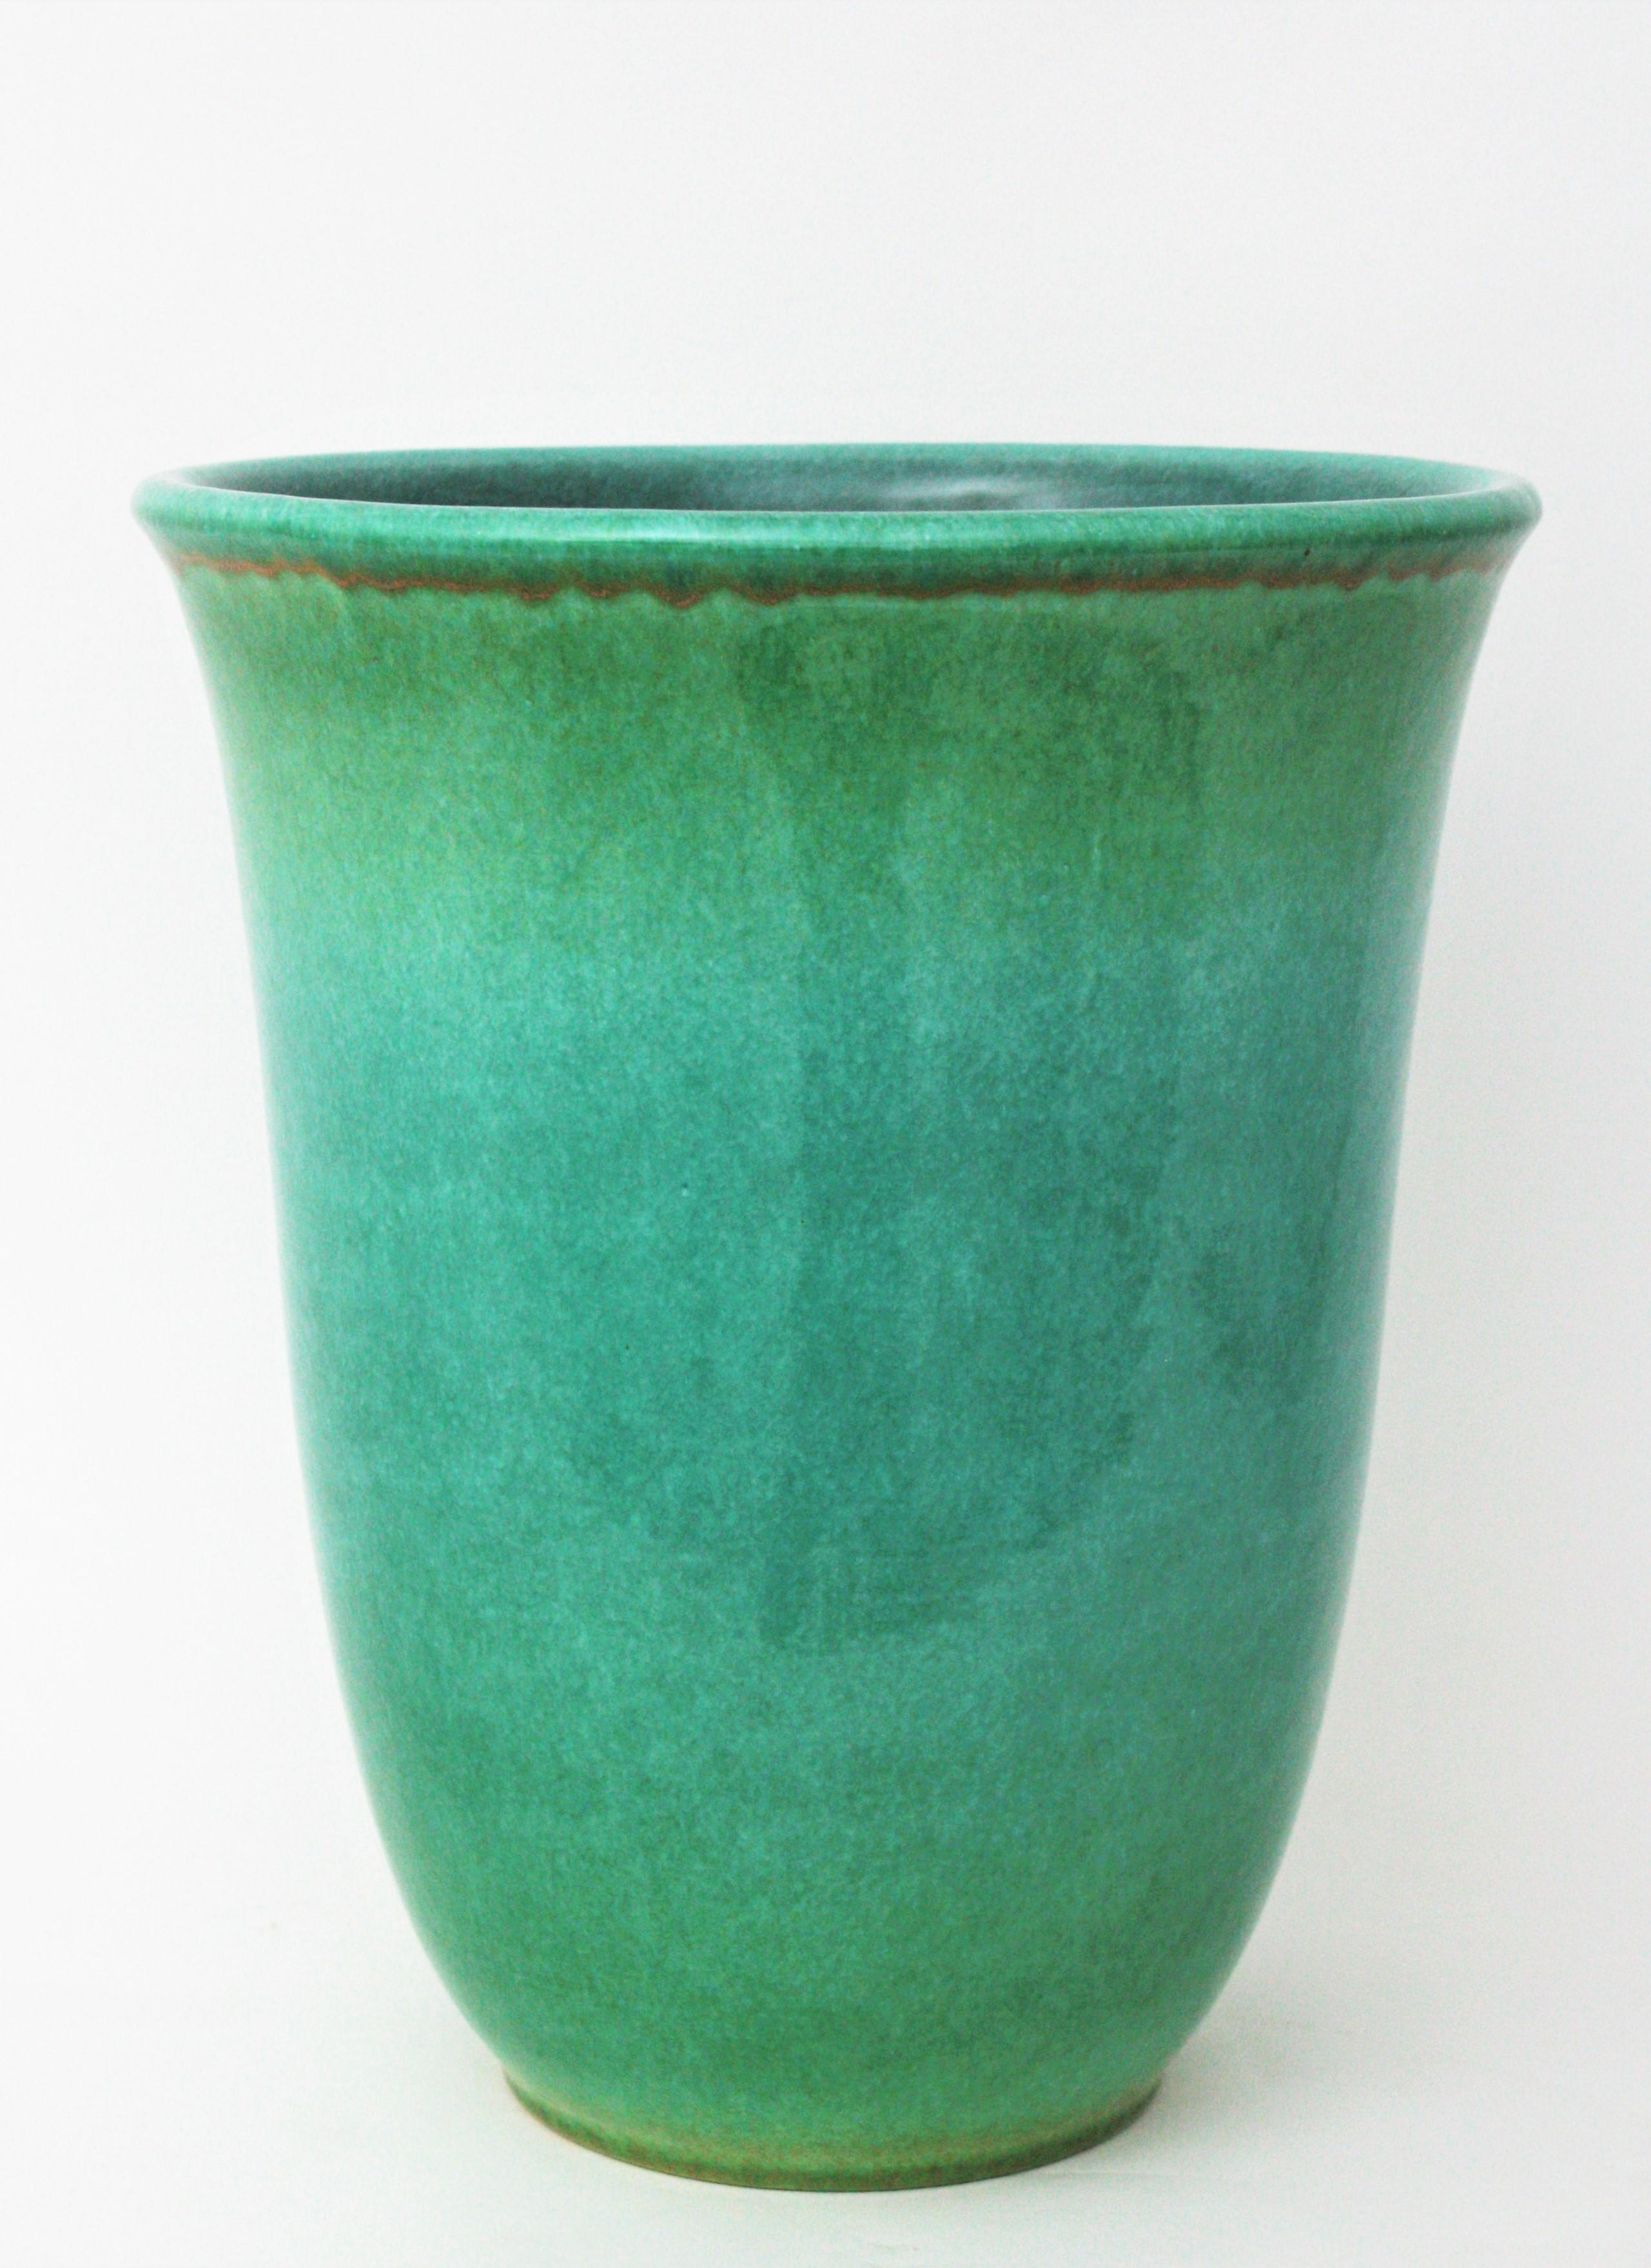 Art Deco Spanish Large Vase by Serra in Turquoise Glazed Ceramic  For Sale